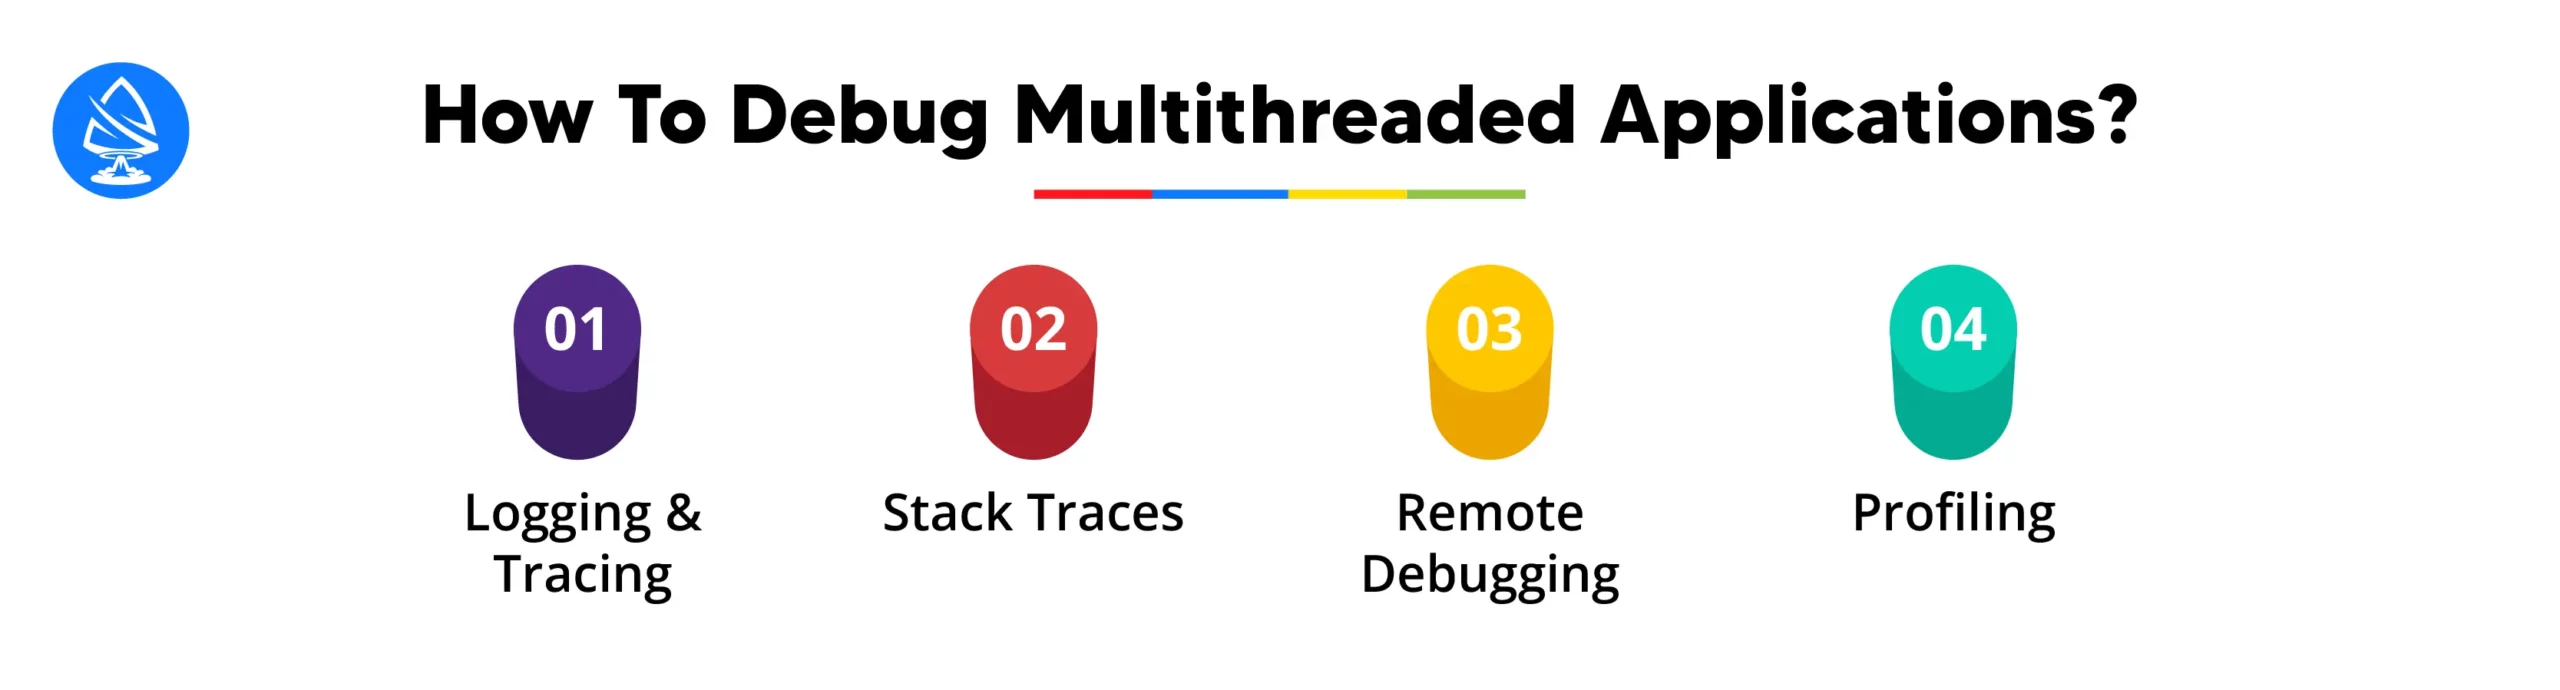 Debugging Multithreaded Applications 